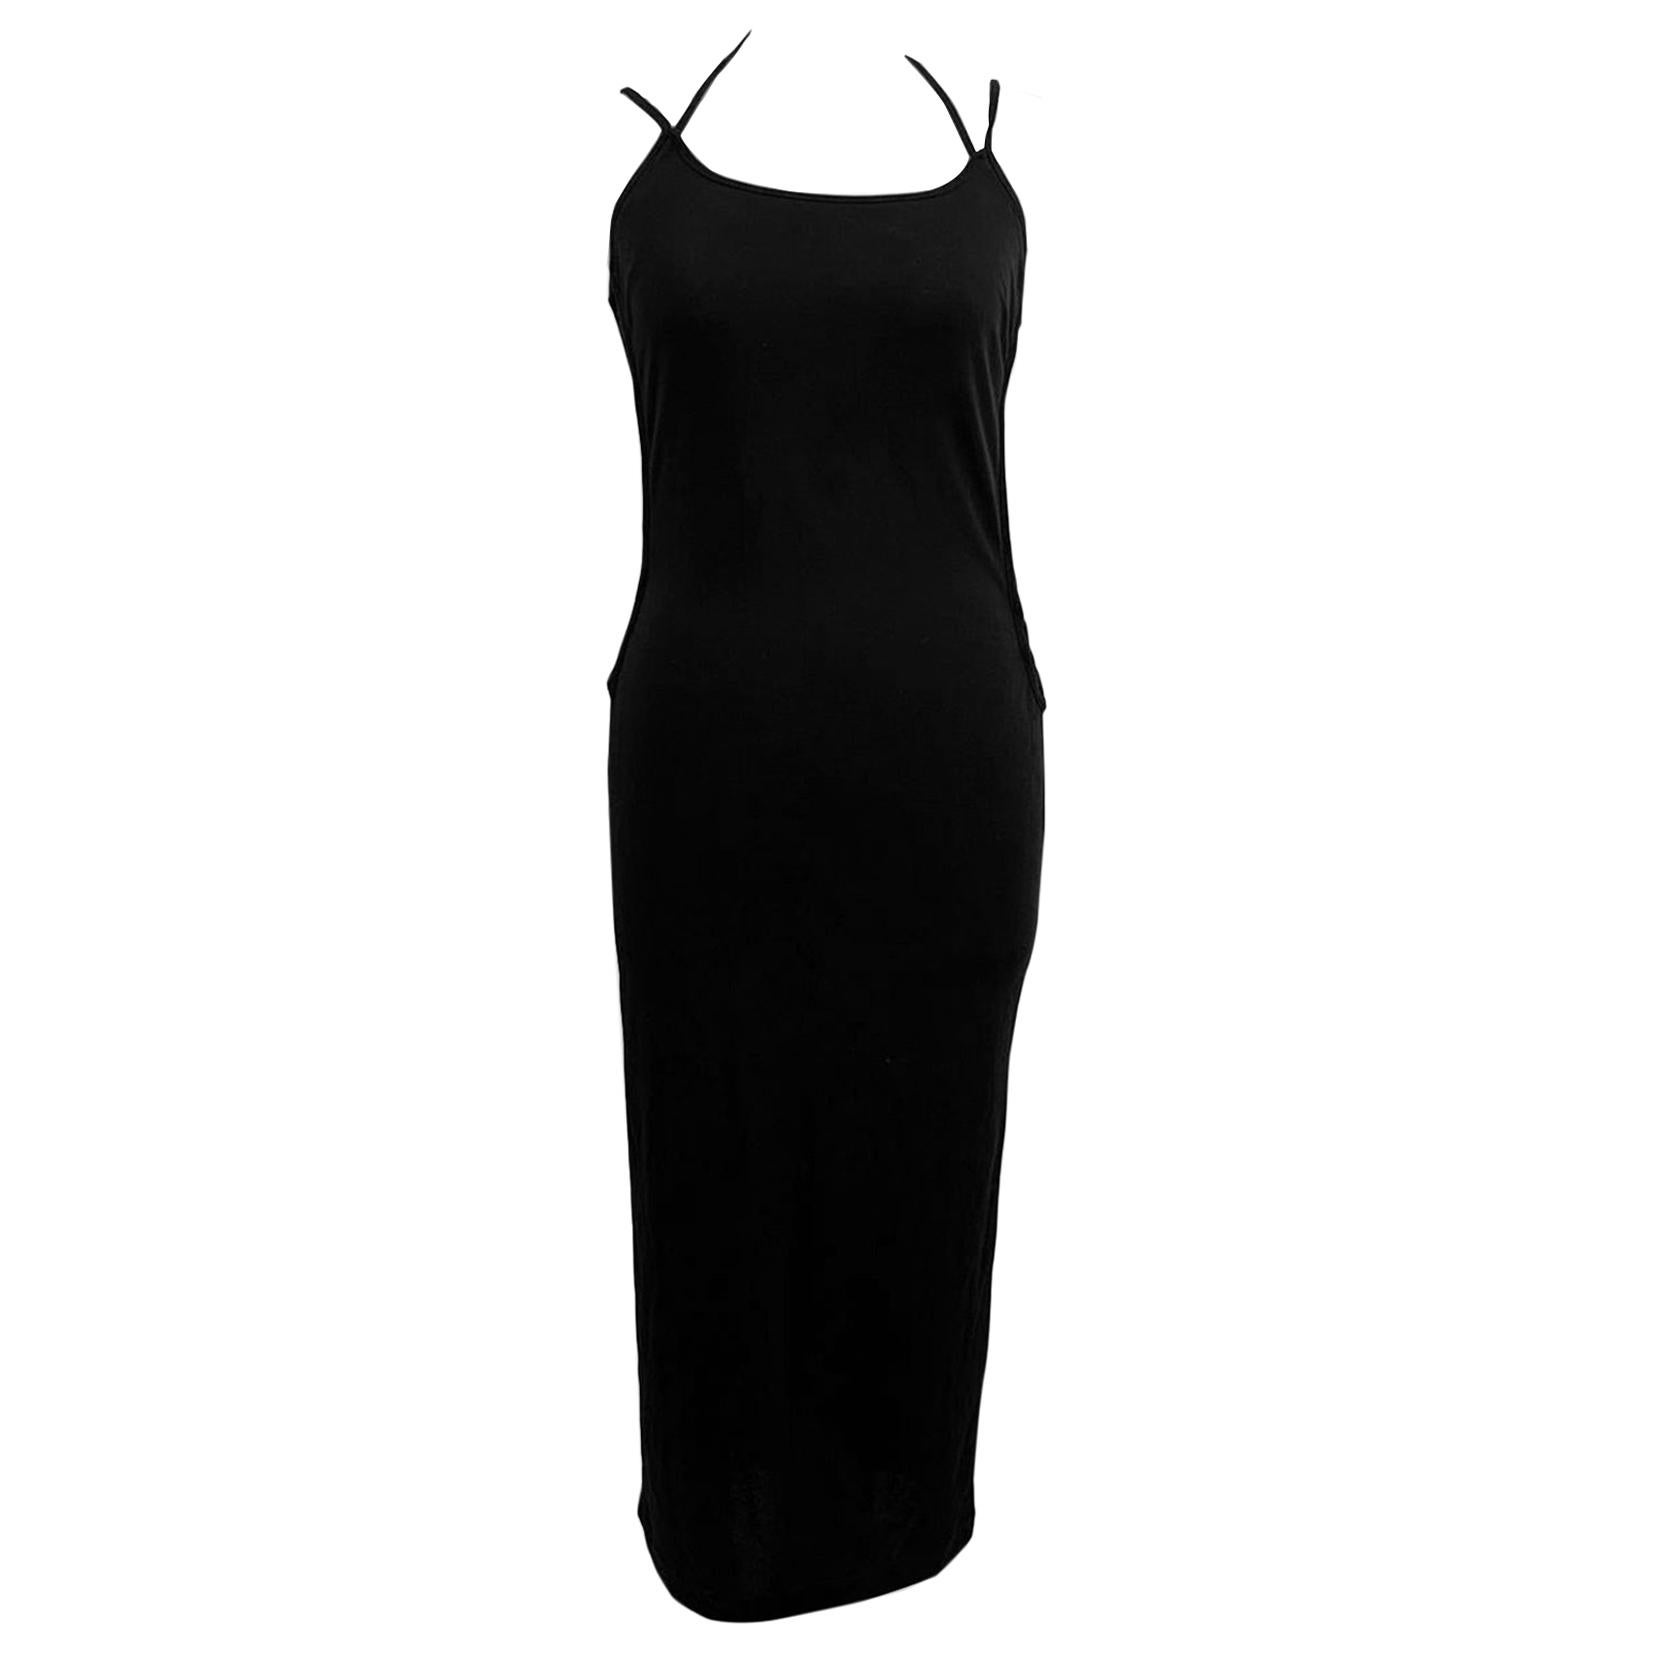 D&G Dolce & Gabbana Black Bodycon Dress with Crisscross Detail Size 44